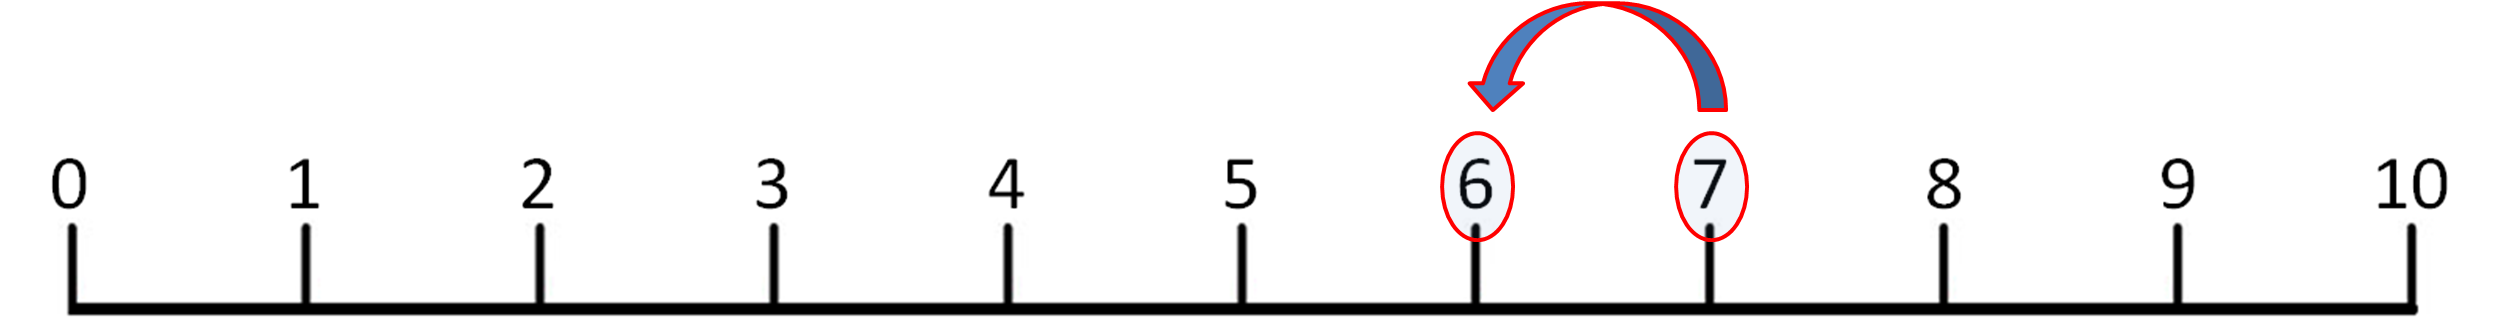 a number line